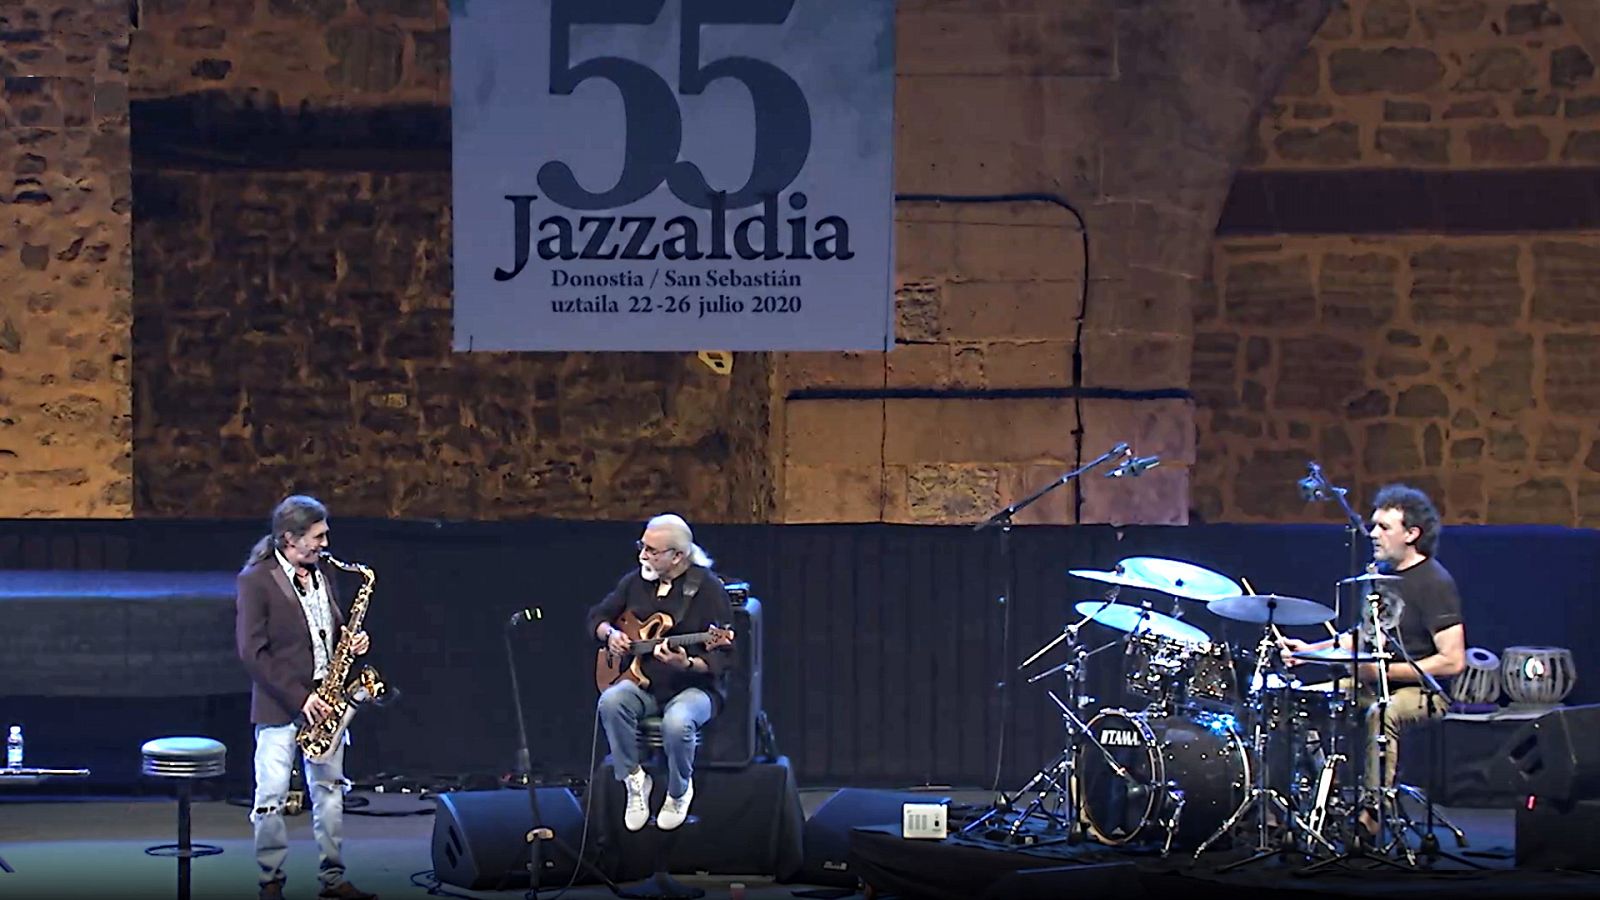 Festivales de verano de La 2 - 55º Jazzaldia: Benavent, Di Geraldo, Pardo